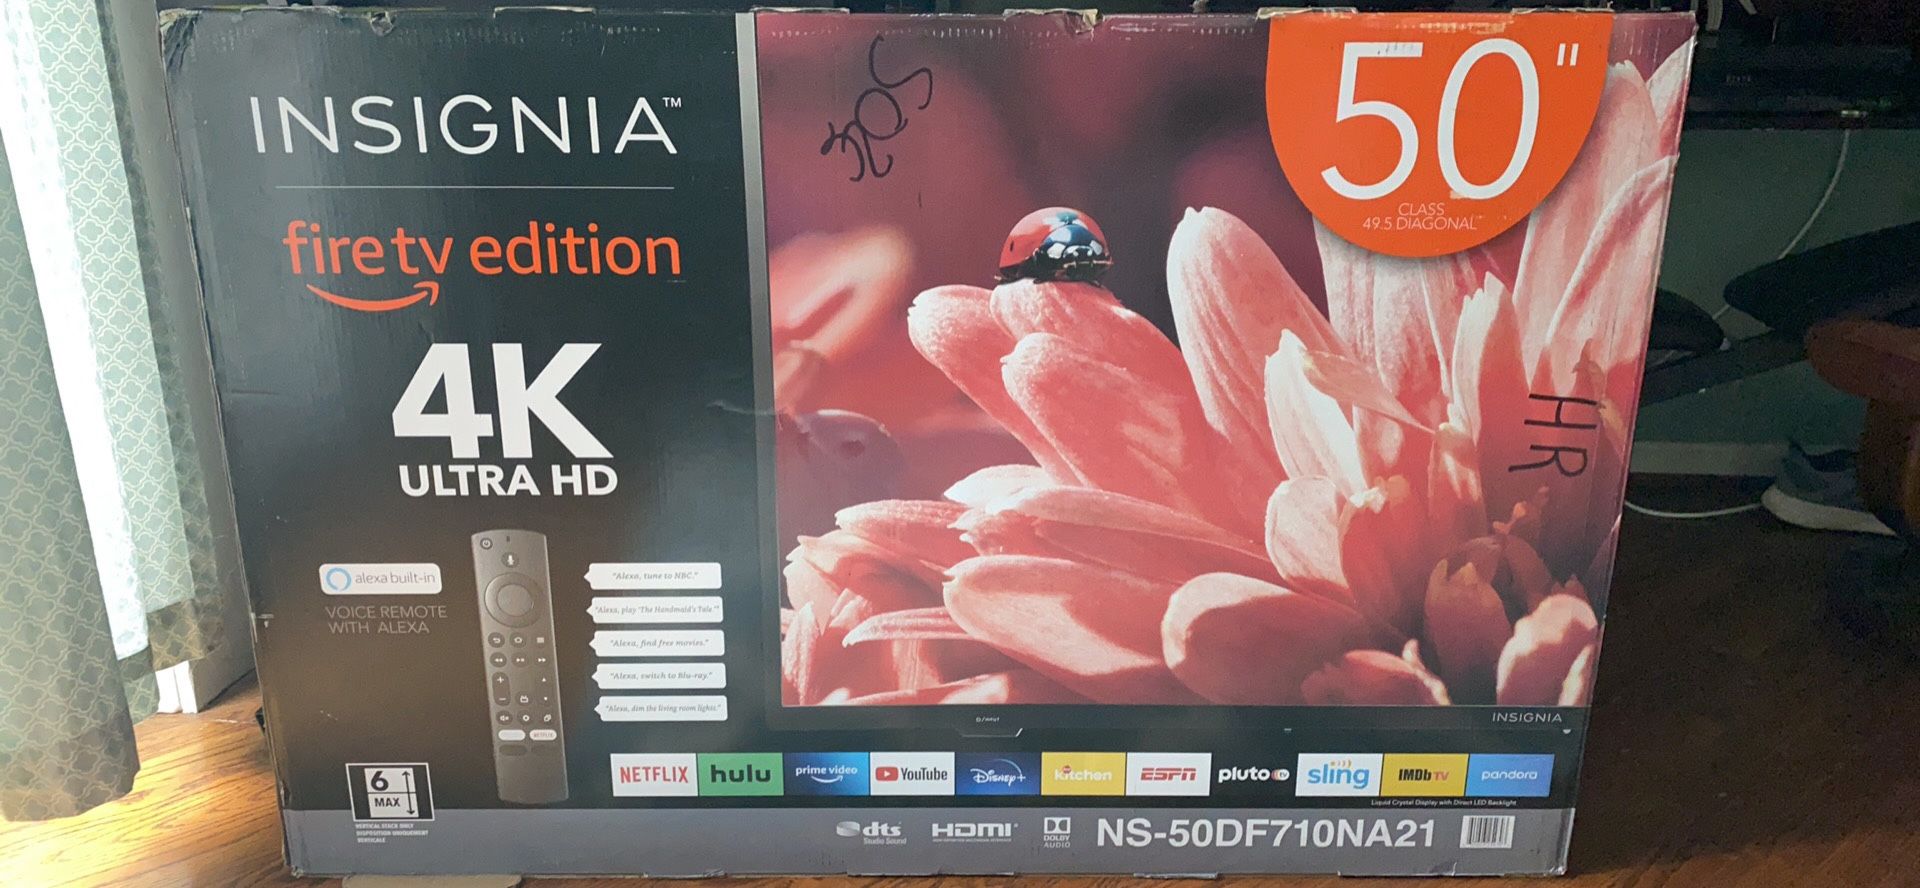 Insignia 50’’ 4K Ultra HD FireTv Edition